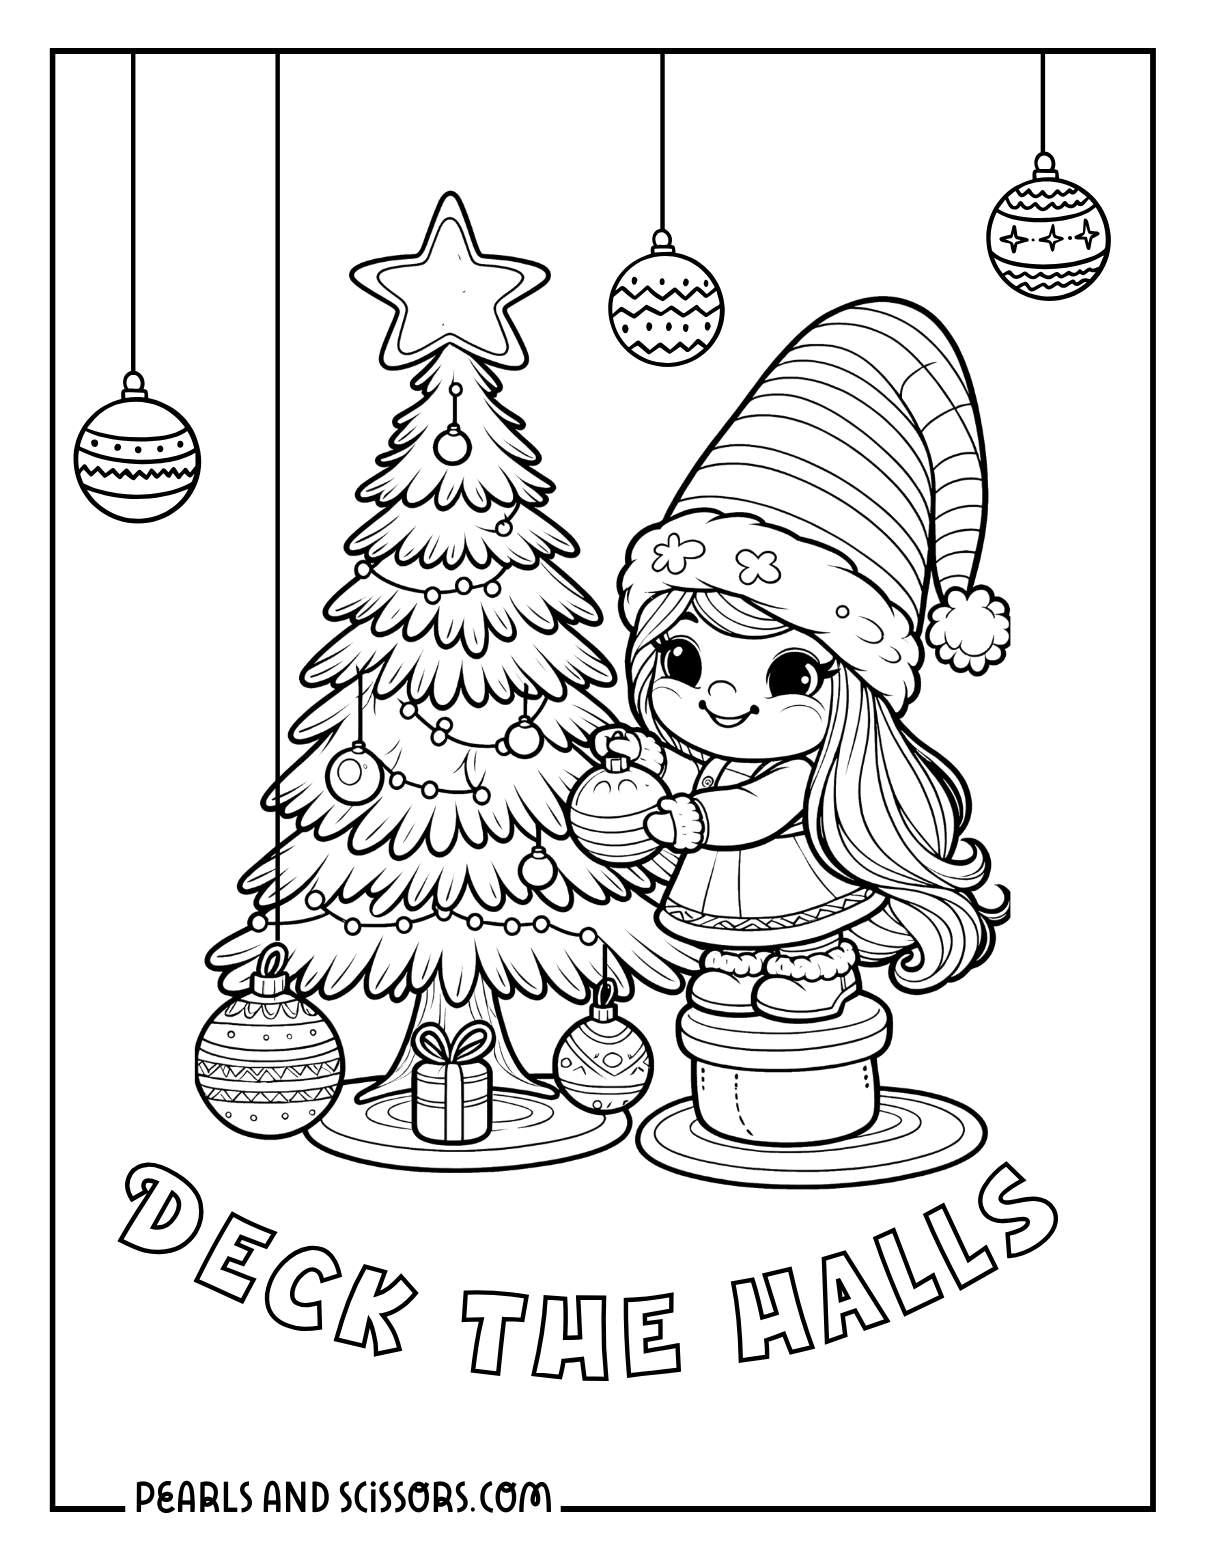 Kawaii girl gnome decorating the christmas tree coloring page.